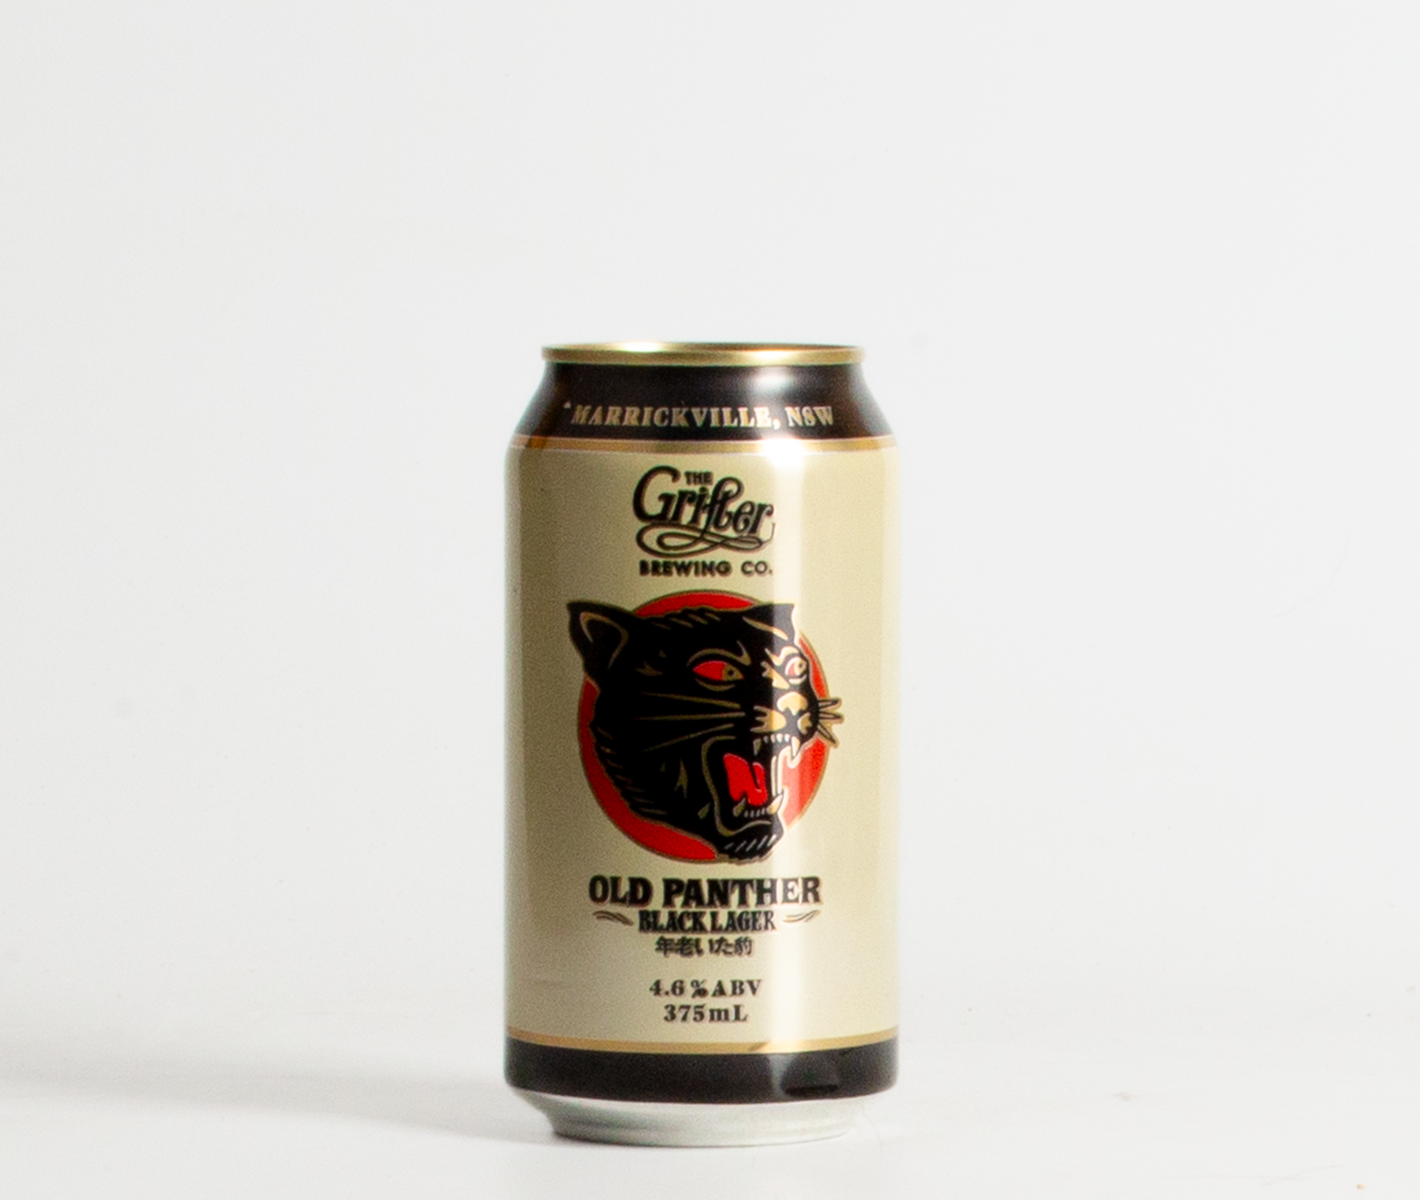 Old Panther Black Lager (375ml)